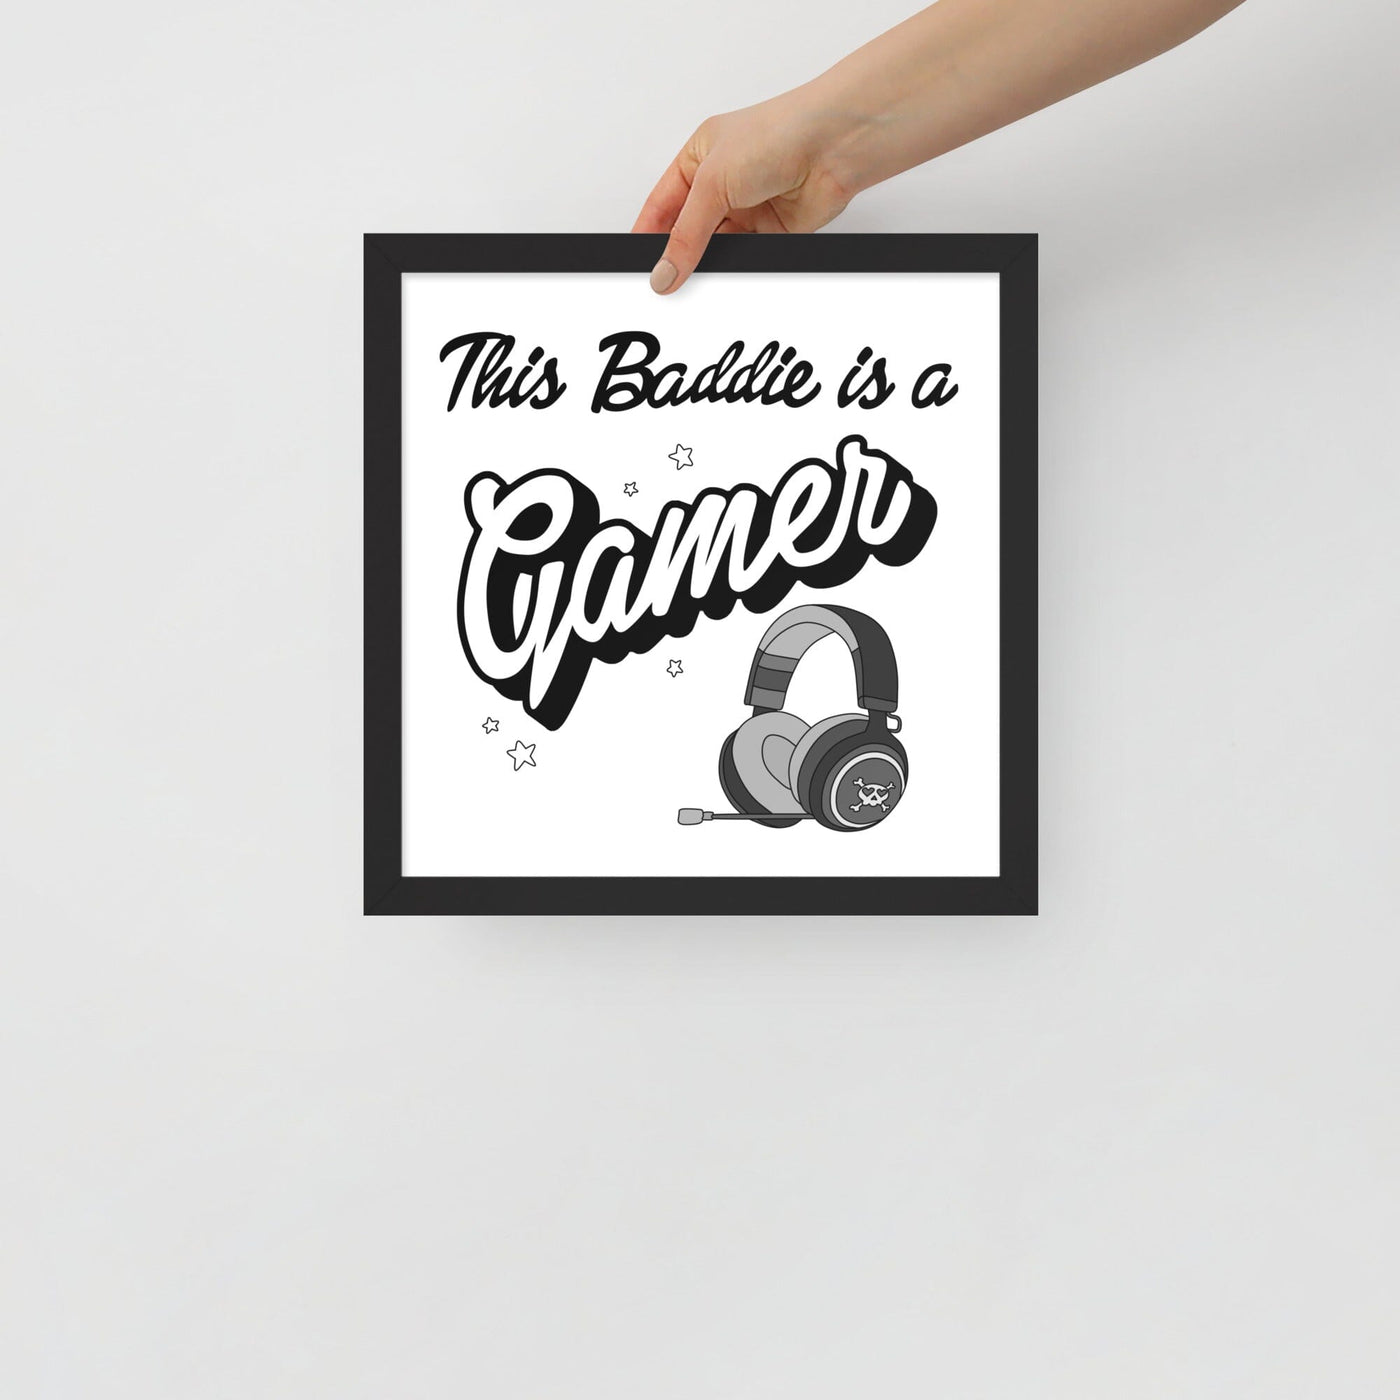 This Baddie is a Gamer (Punk) | Framed poster | Feminist Gamer Threads & Thistles Inventory Black 12″×12″ 